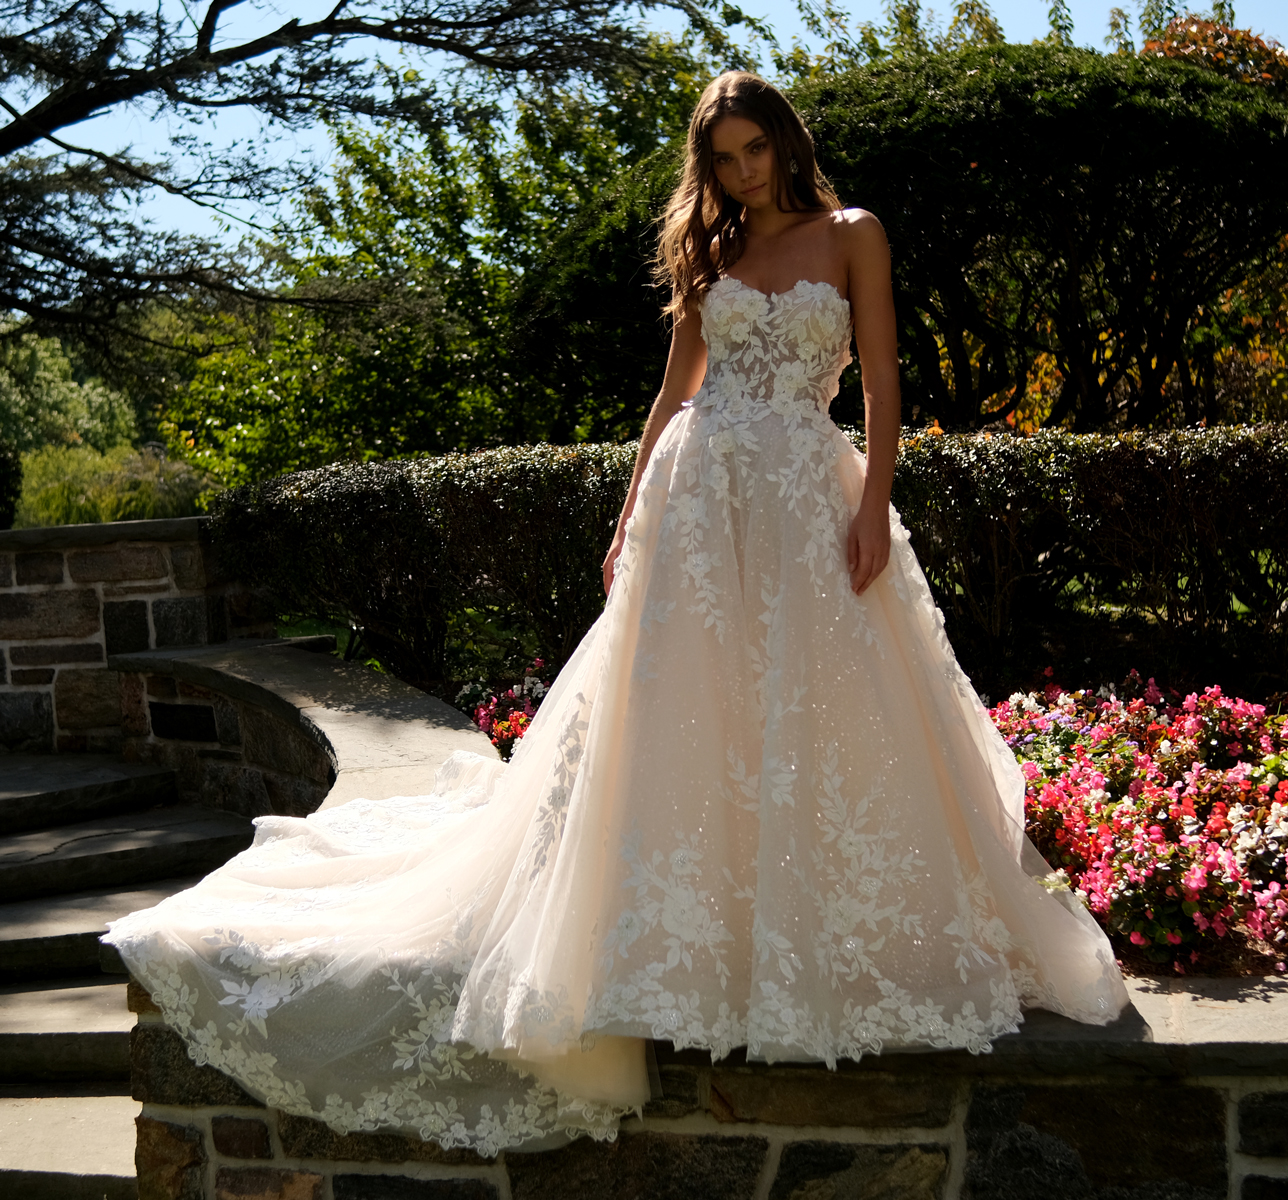 White veil with ivory dress?, Weddings, Wedding Attire